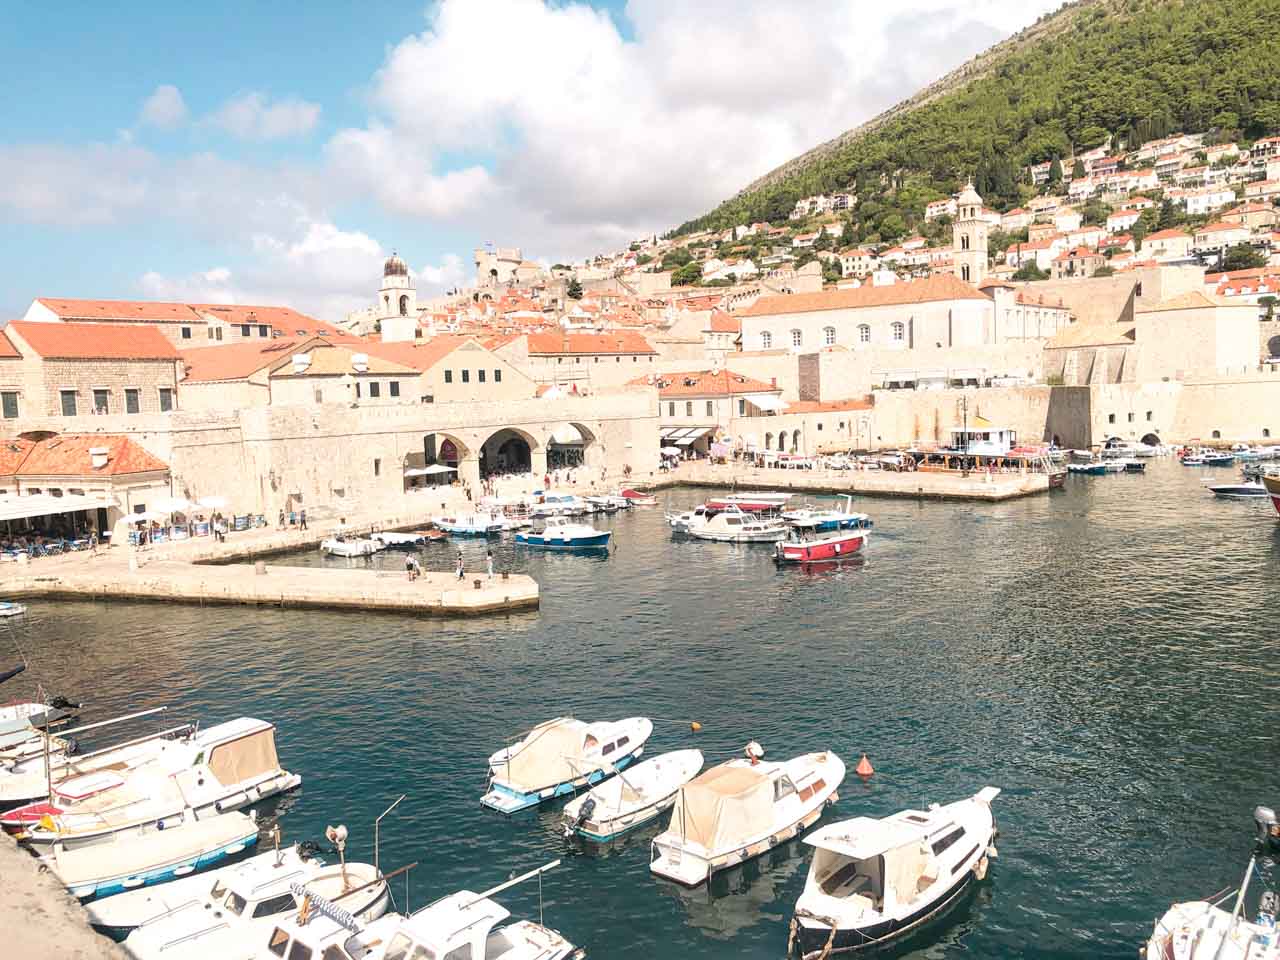 The old port of Dubrovnik - old city harbour in Dubrovnik, Croatia